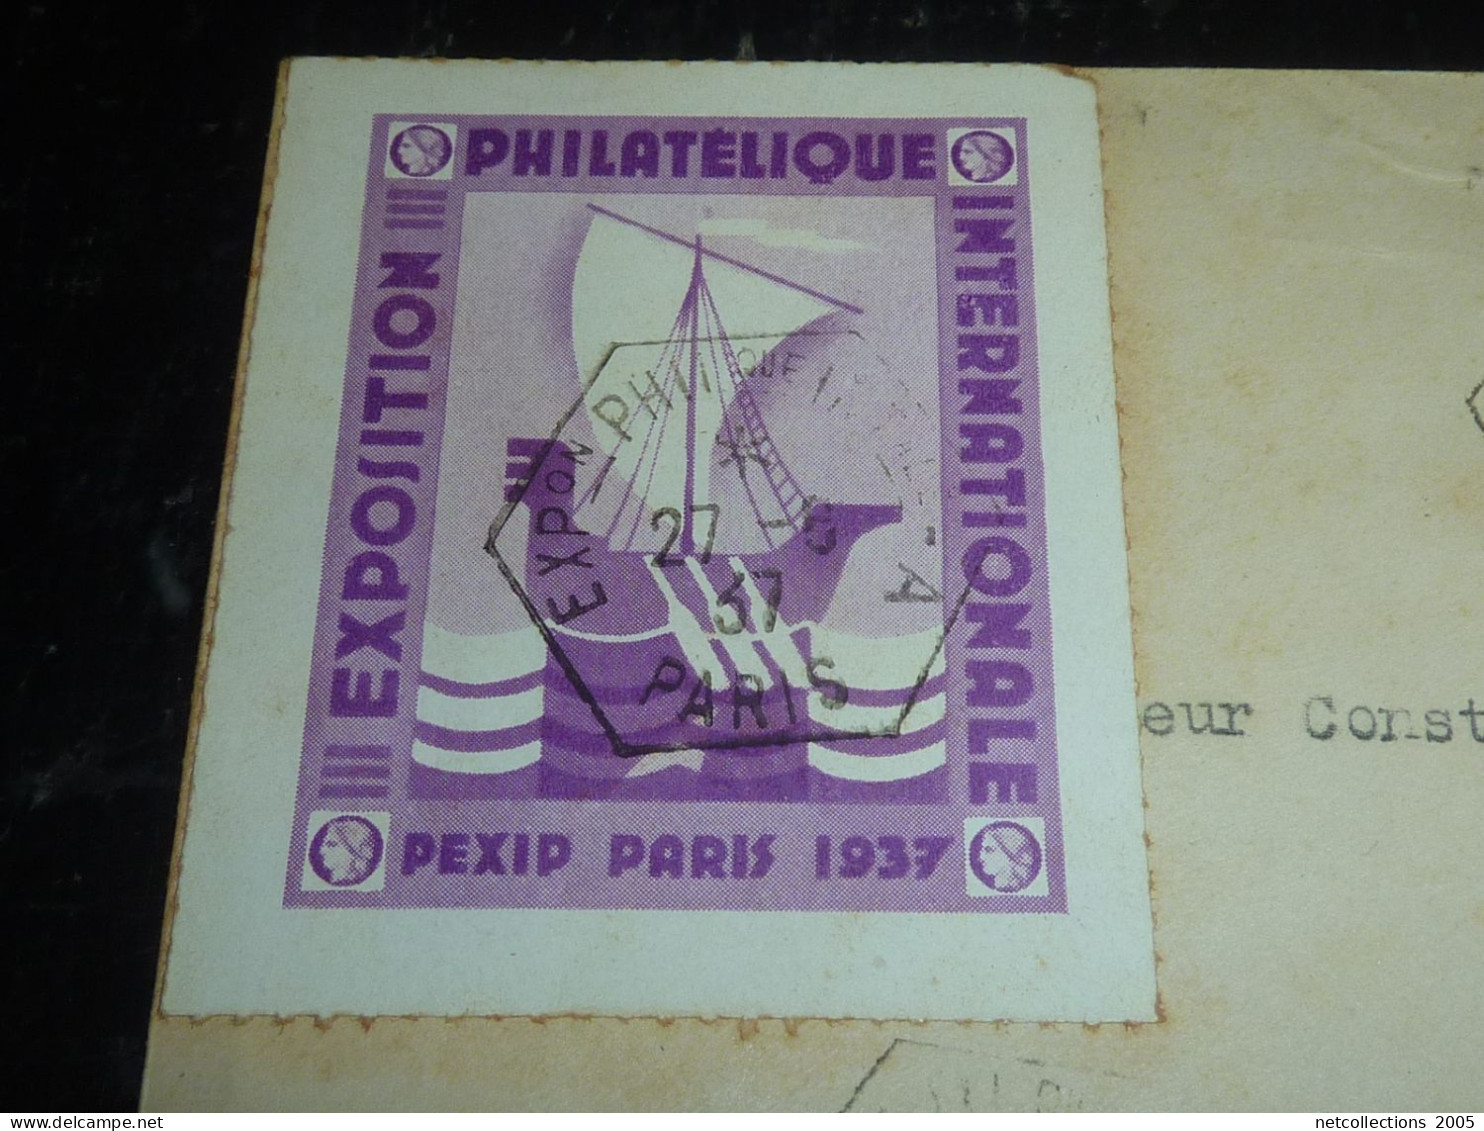 EXPOSITION PHILATELIQUE PEXIP PARIS 1937 - CACHET HEXAGONAL + TIMBRE N°329 + VIGNETTE (20/09) - Philatelic Fairs